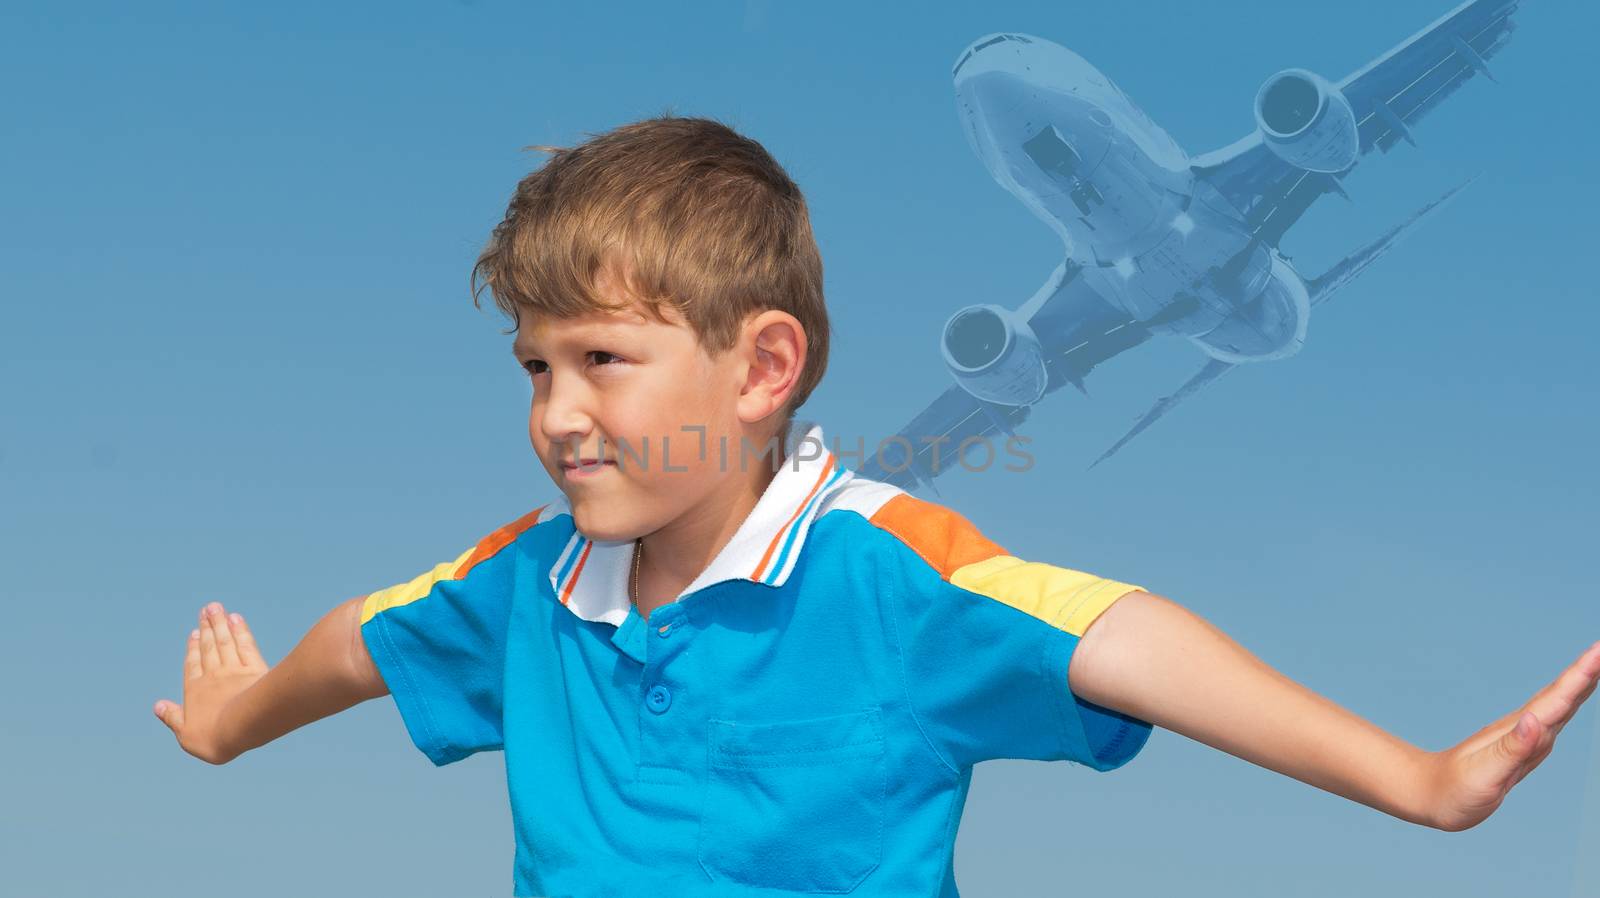 Children dream of flying_ by ben44